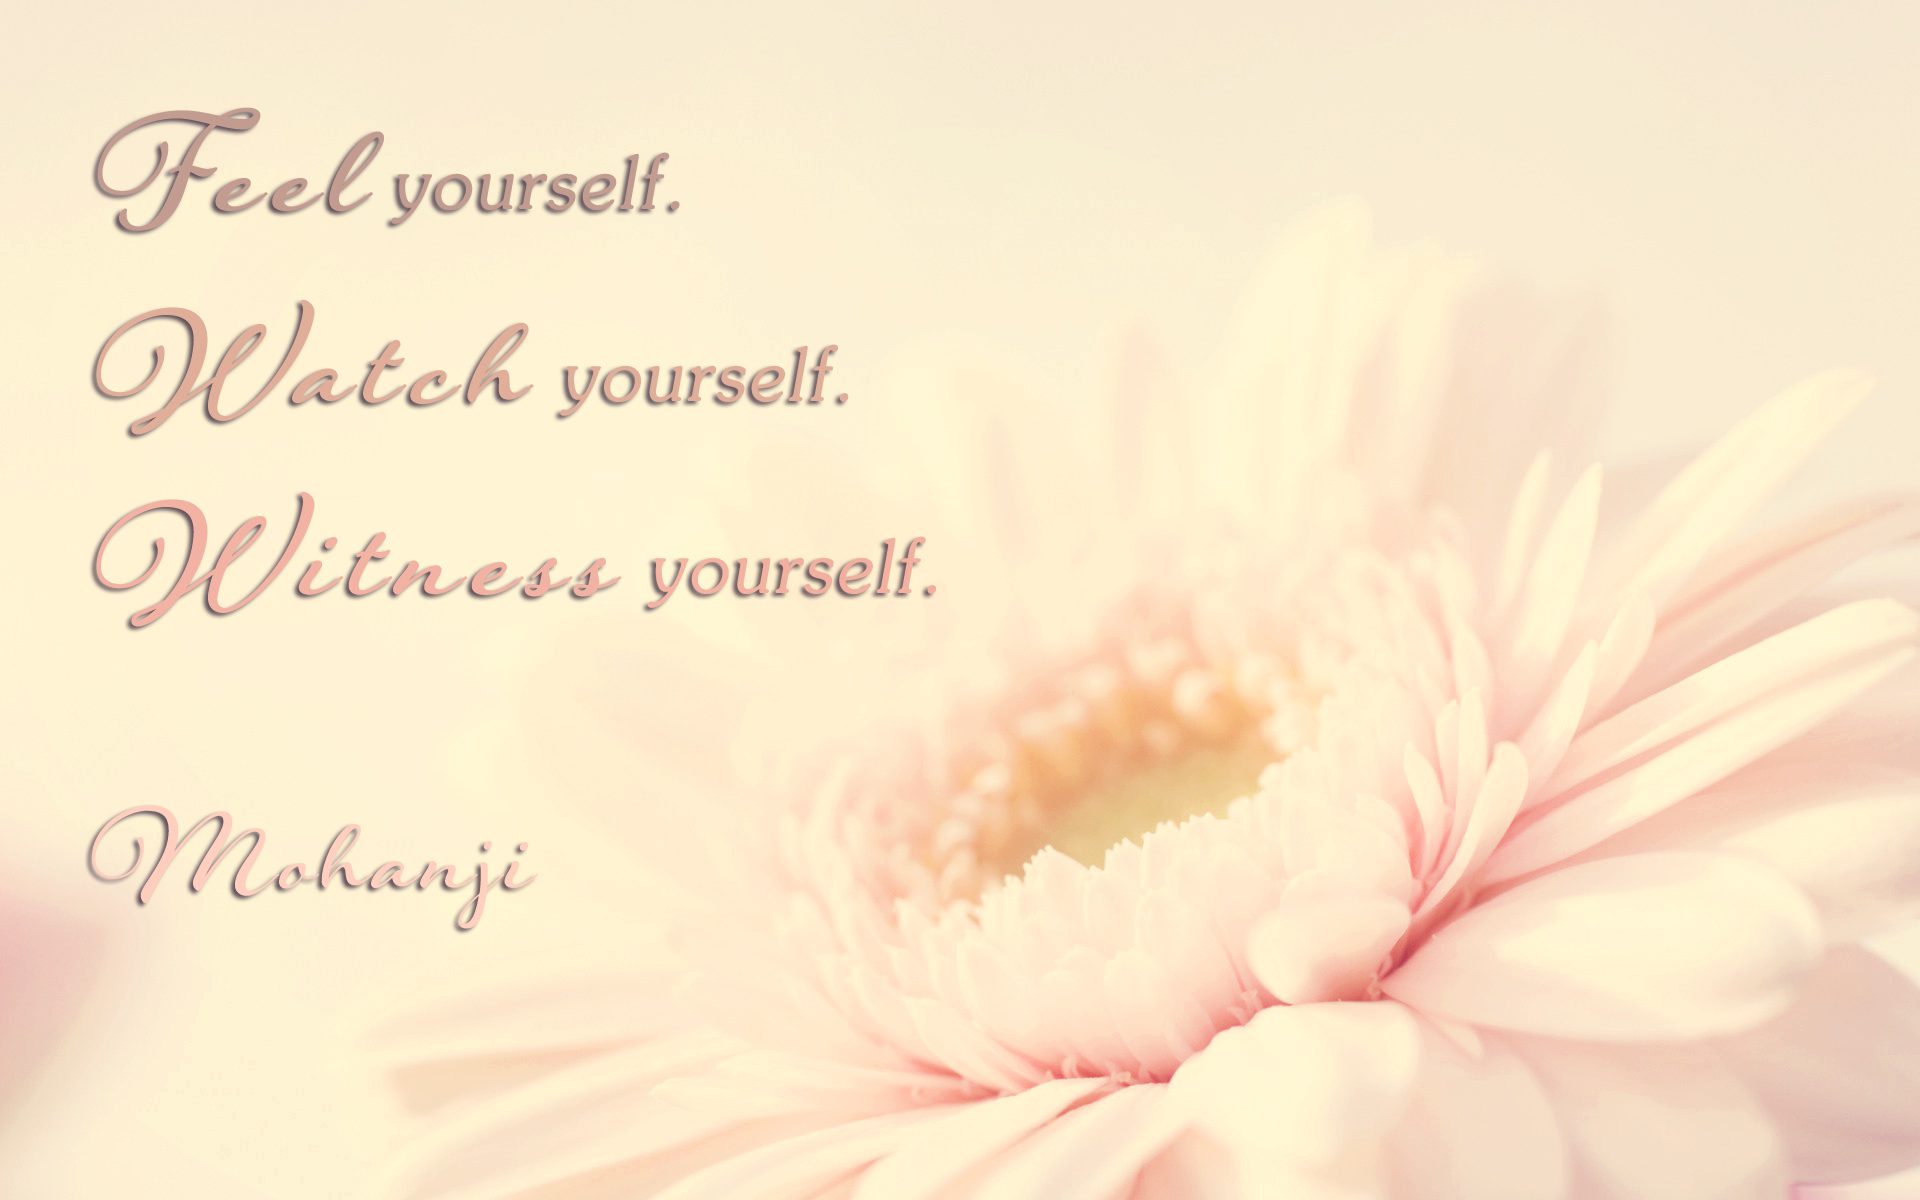 Mohanji quote - Feel yourself watch yourself witness